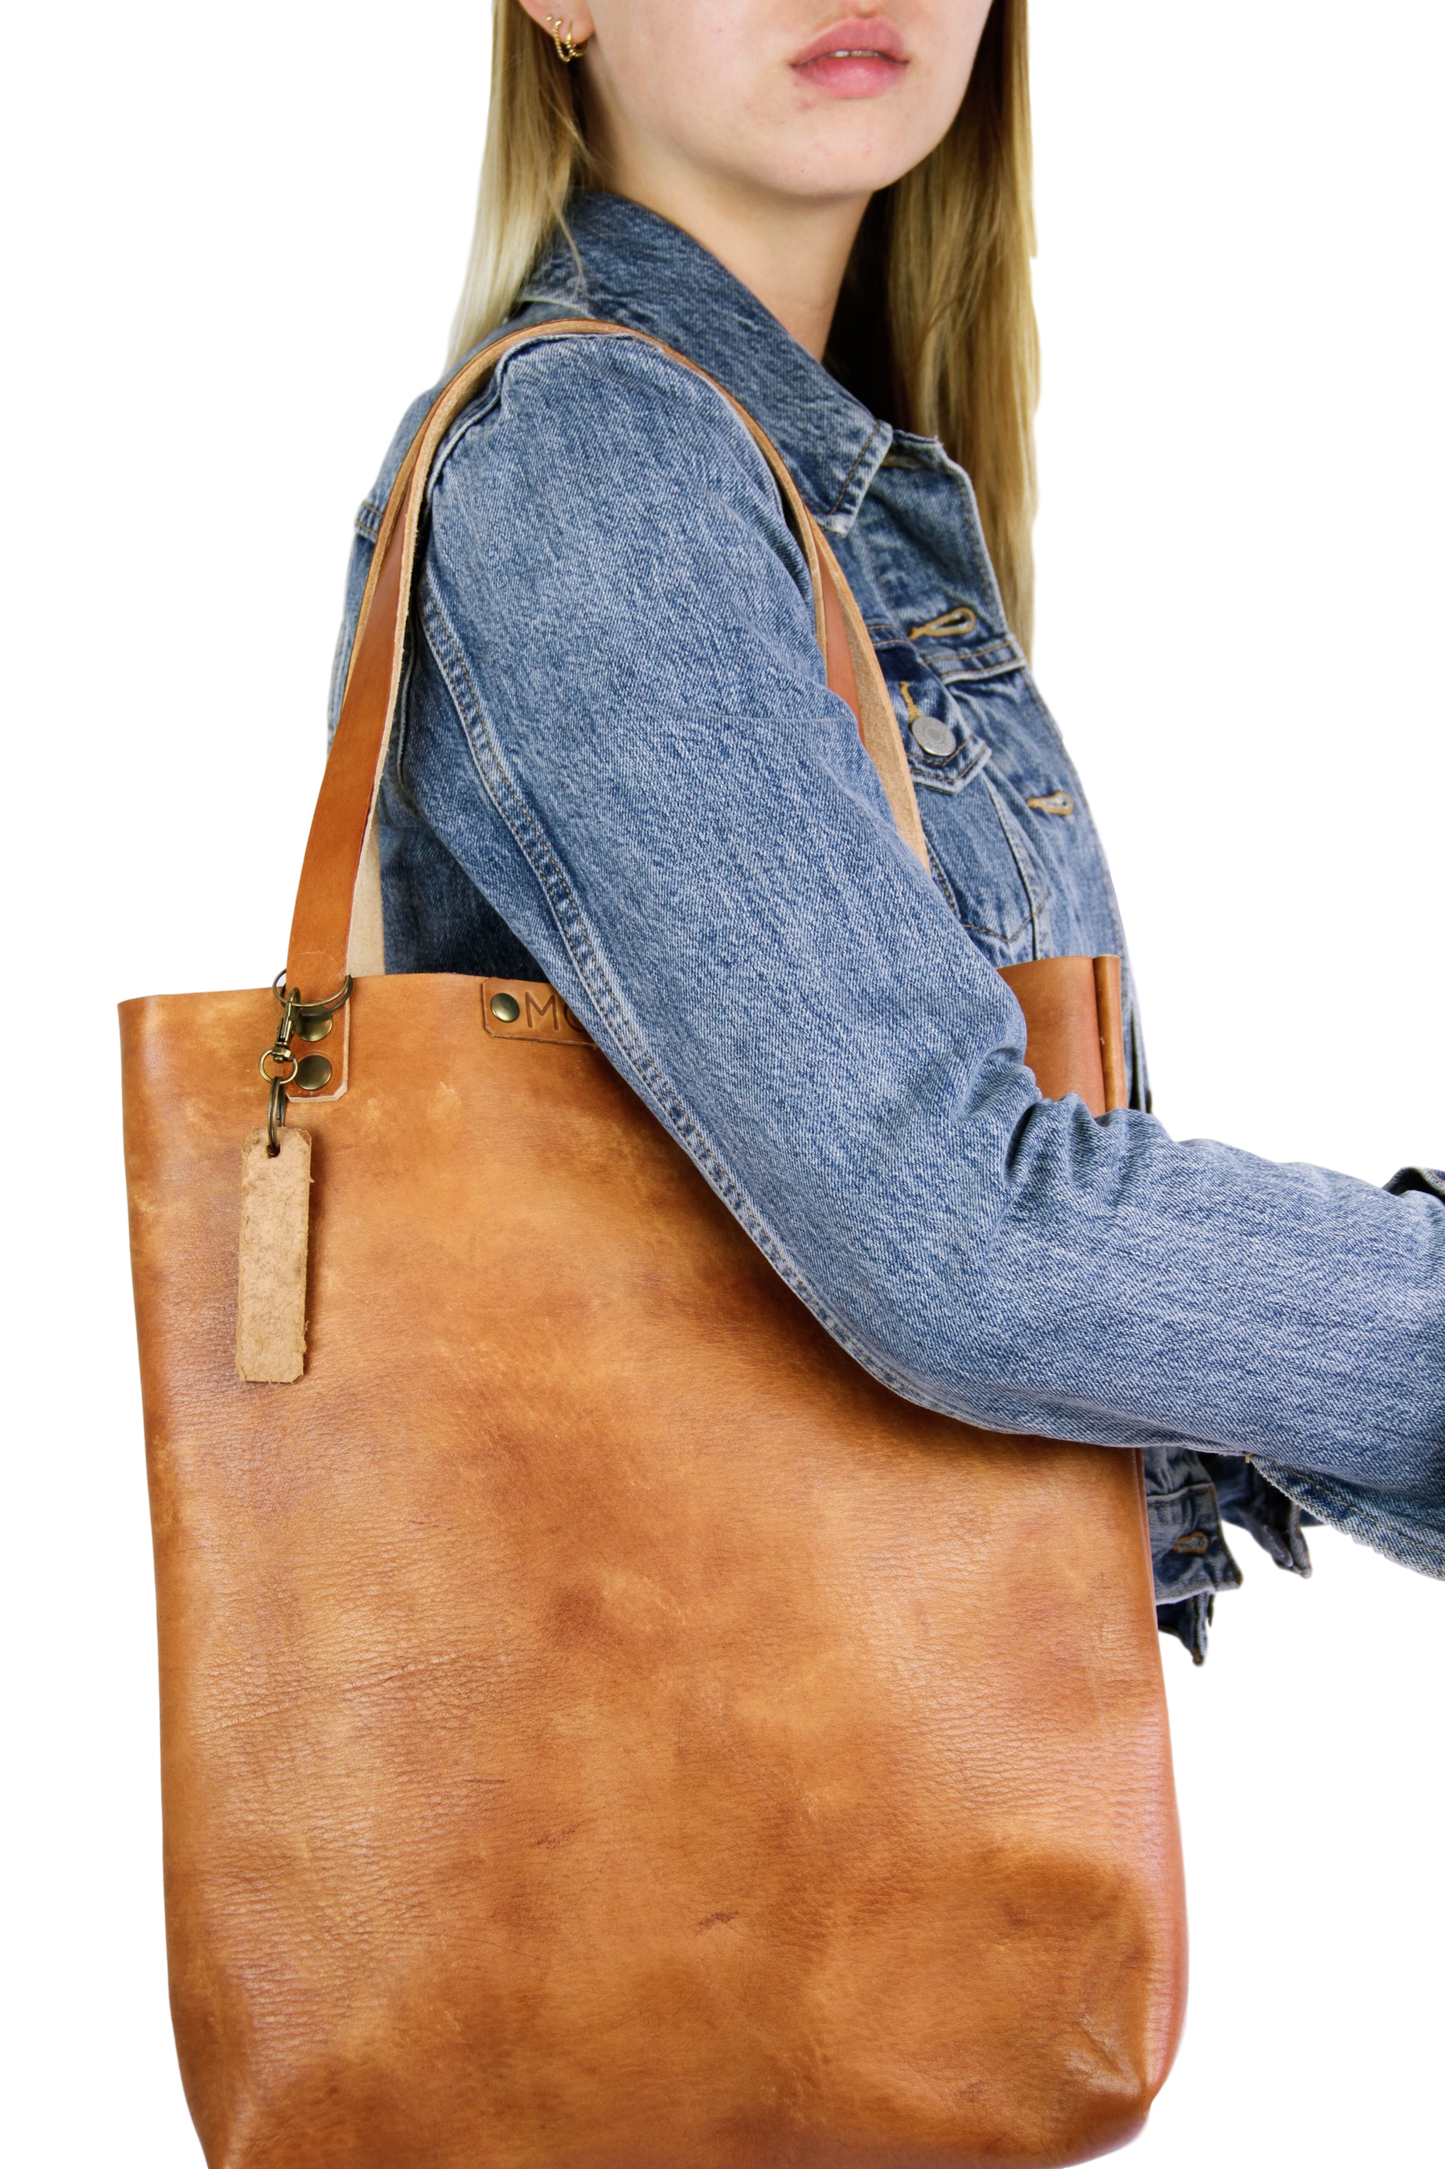 Organic leather tote bag handmade